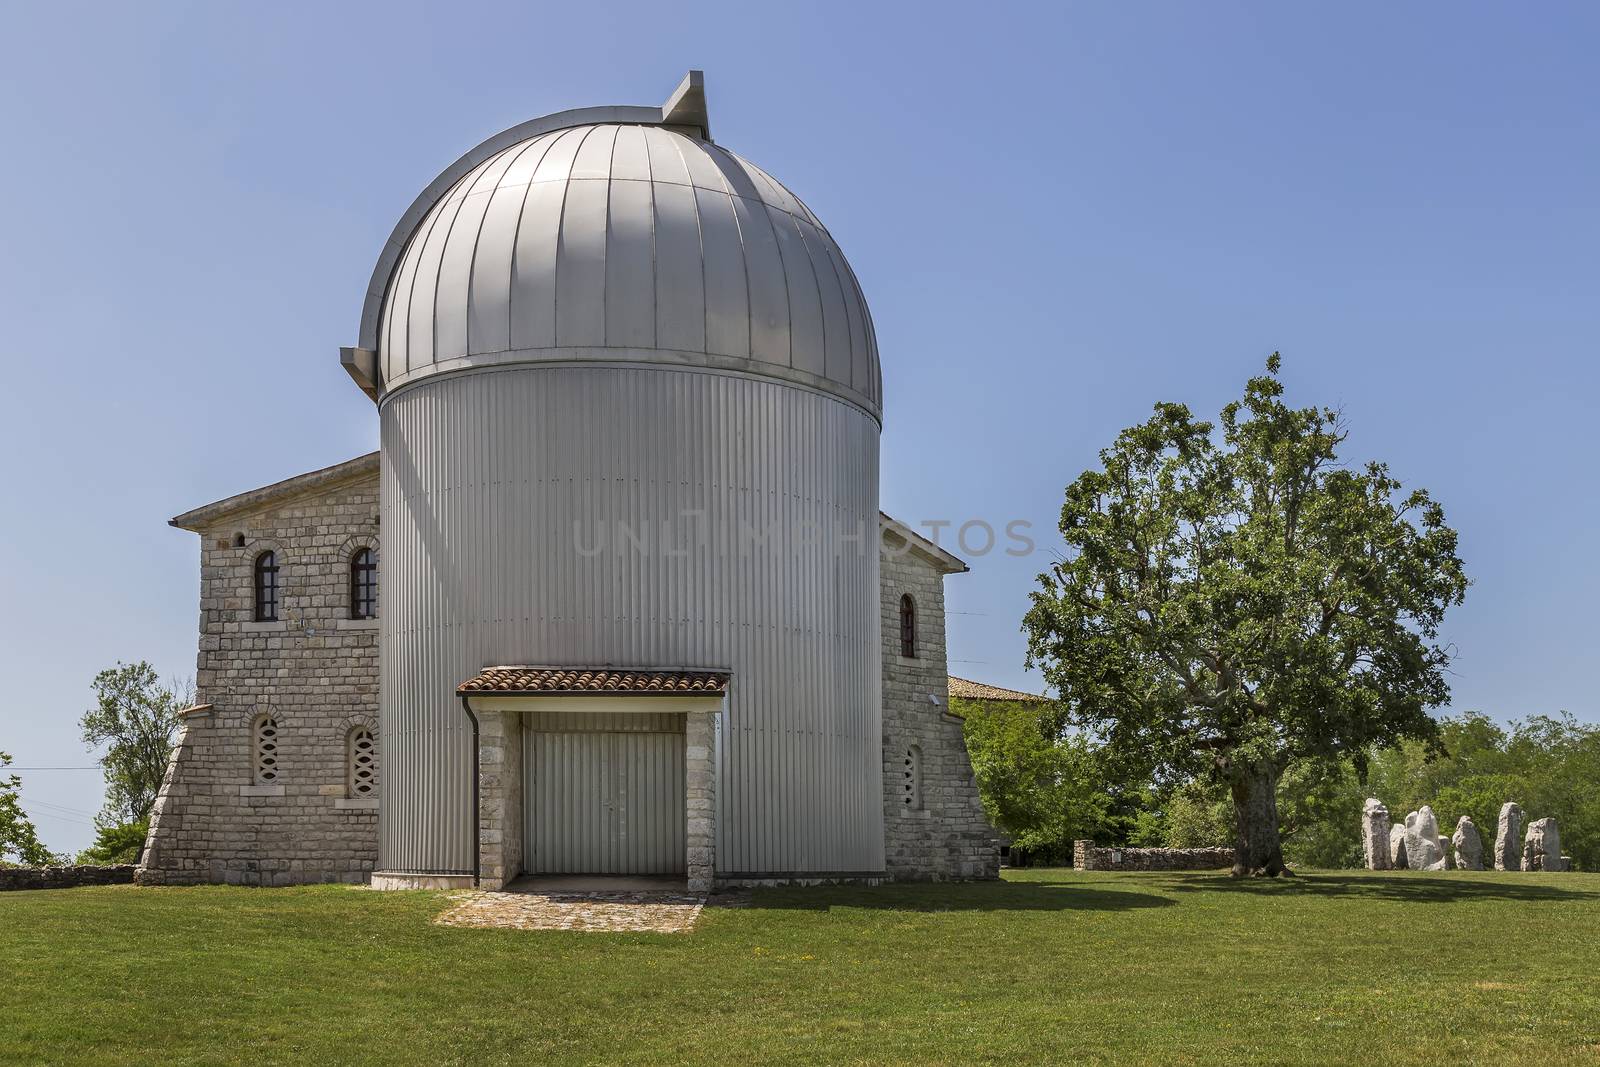 Metal dome of observatory, Tican - Visnjan, Istria, Croatia by sewer12